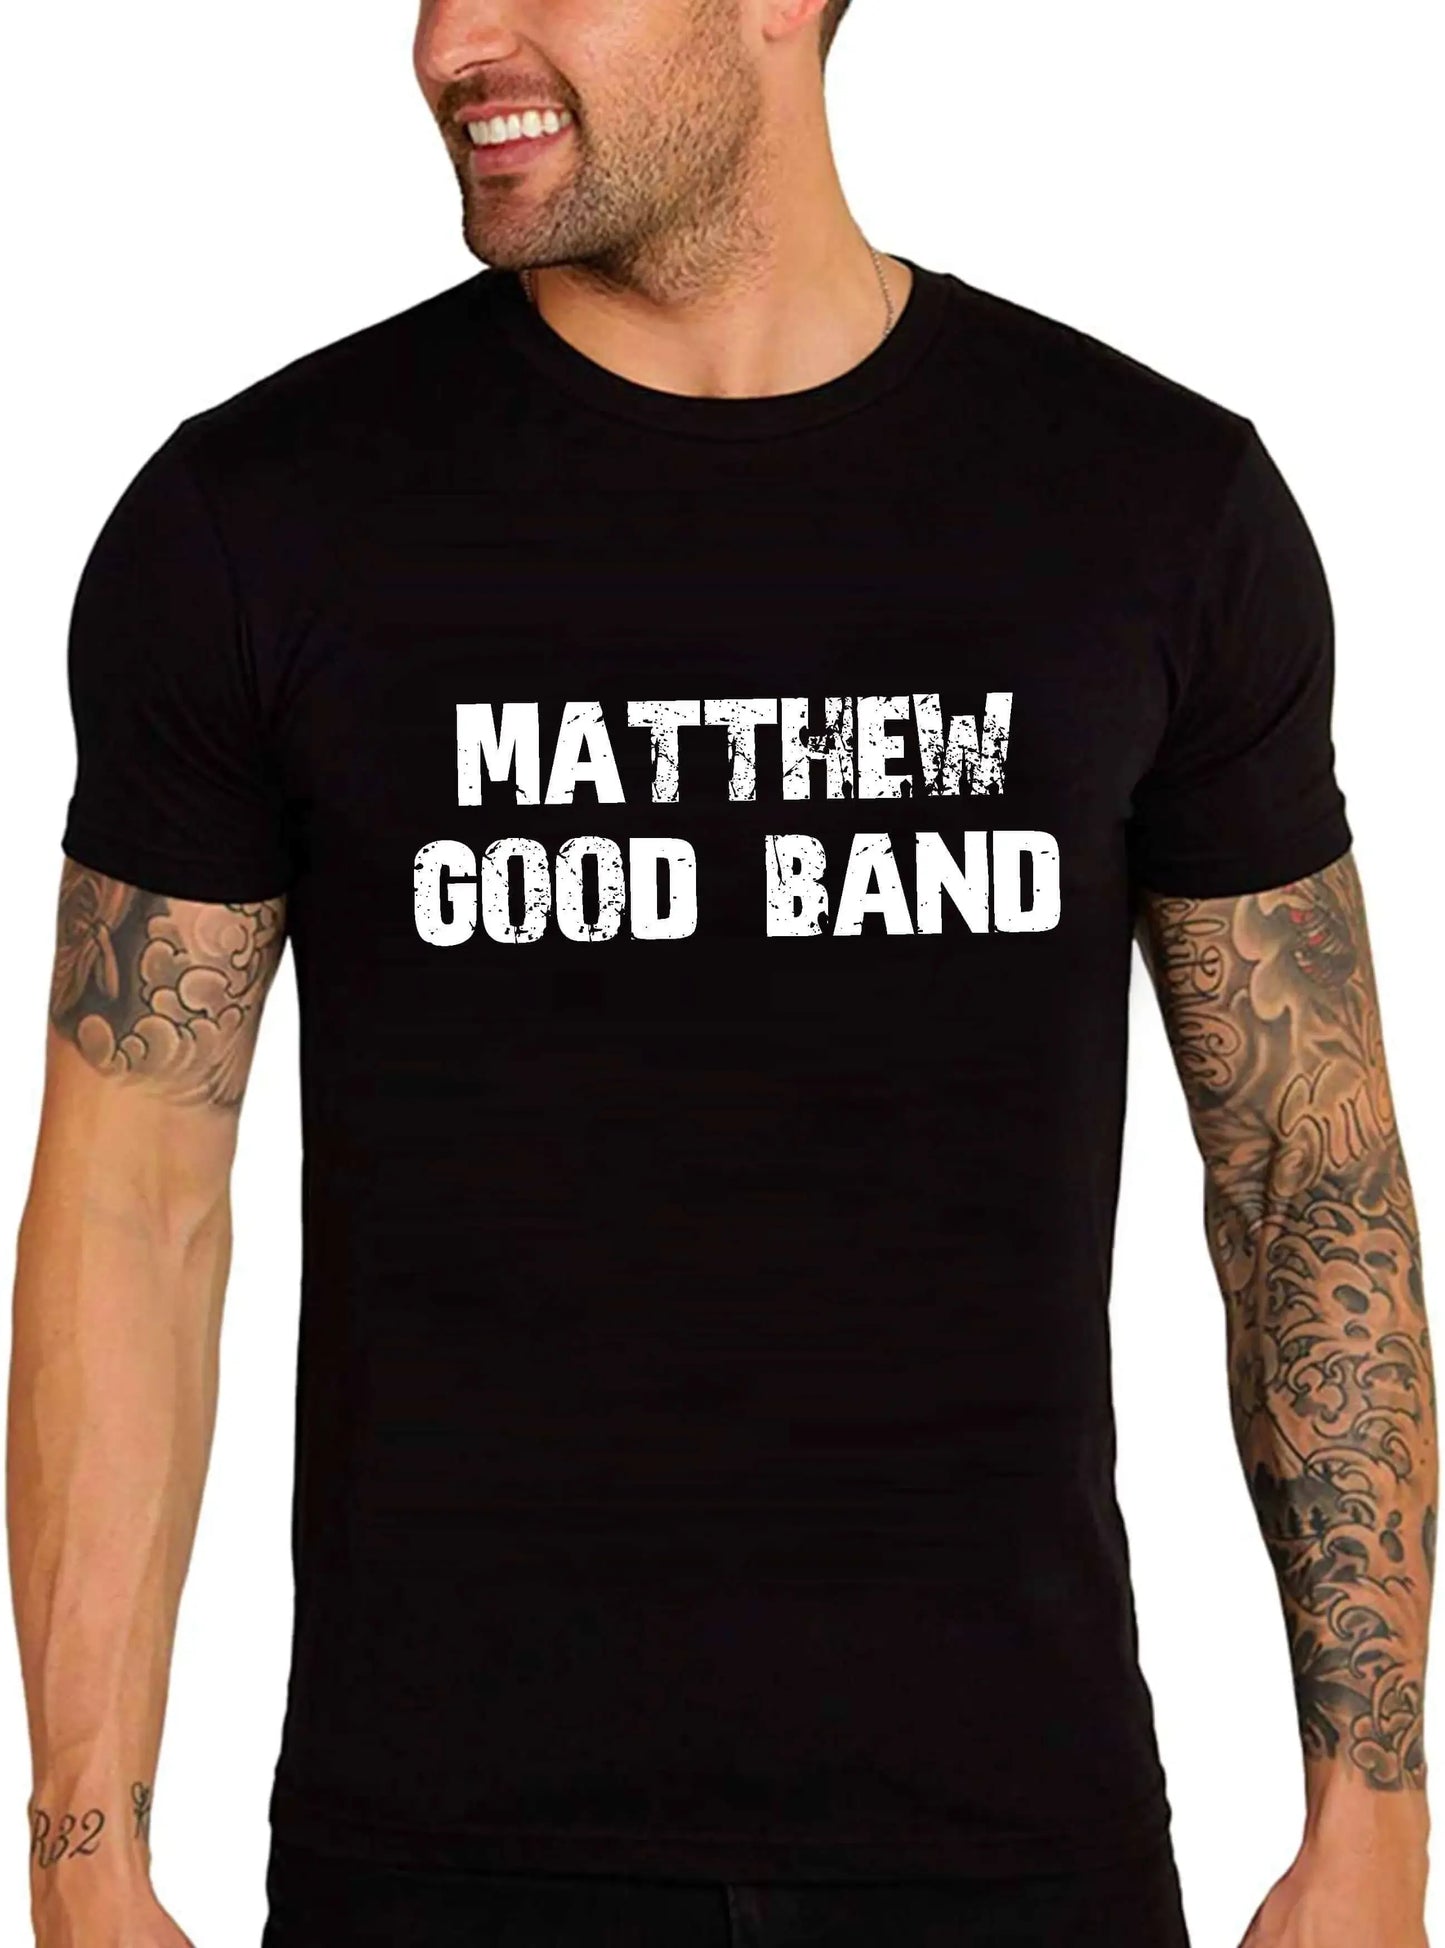 Men's Graphic T-Shirt Matthew Good Band Eco-Friendly Limited Edition Short Sleeve Tee-Shirt Vintage Birthday Gift Novelty